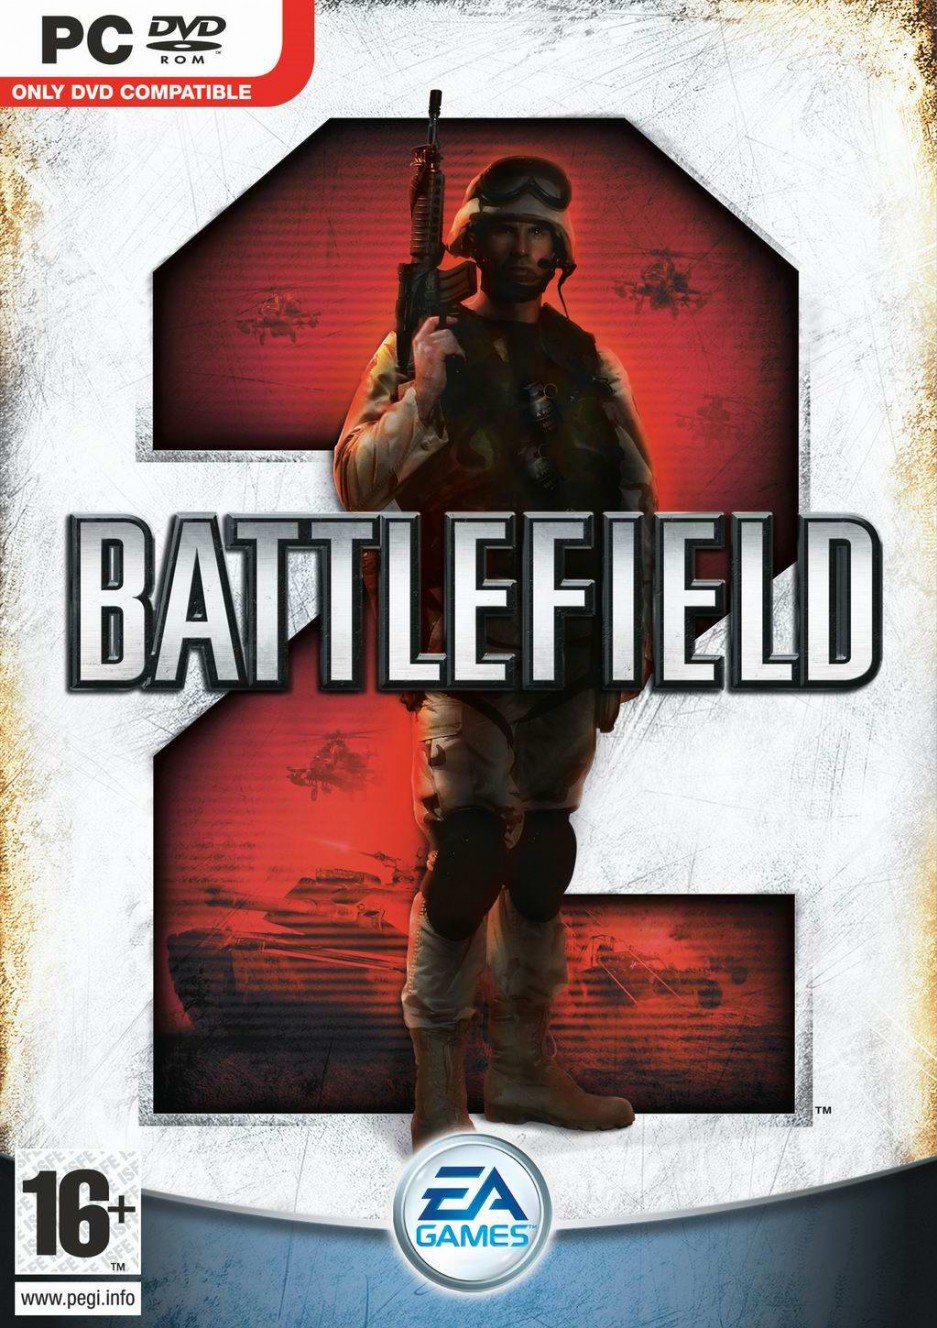 Battlefield 2 cover.jpg